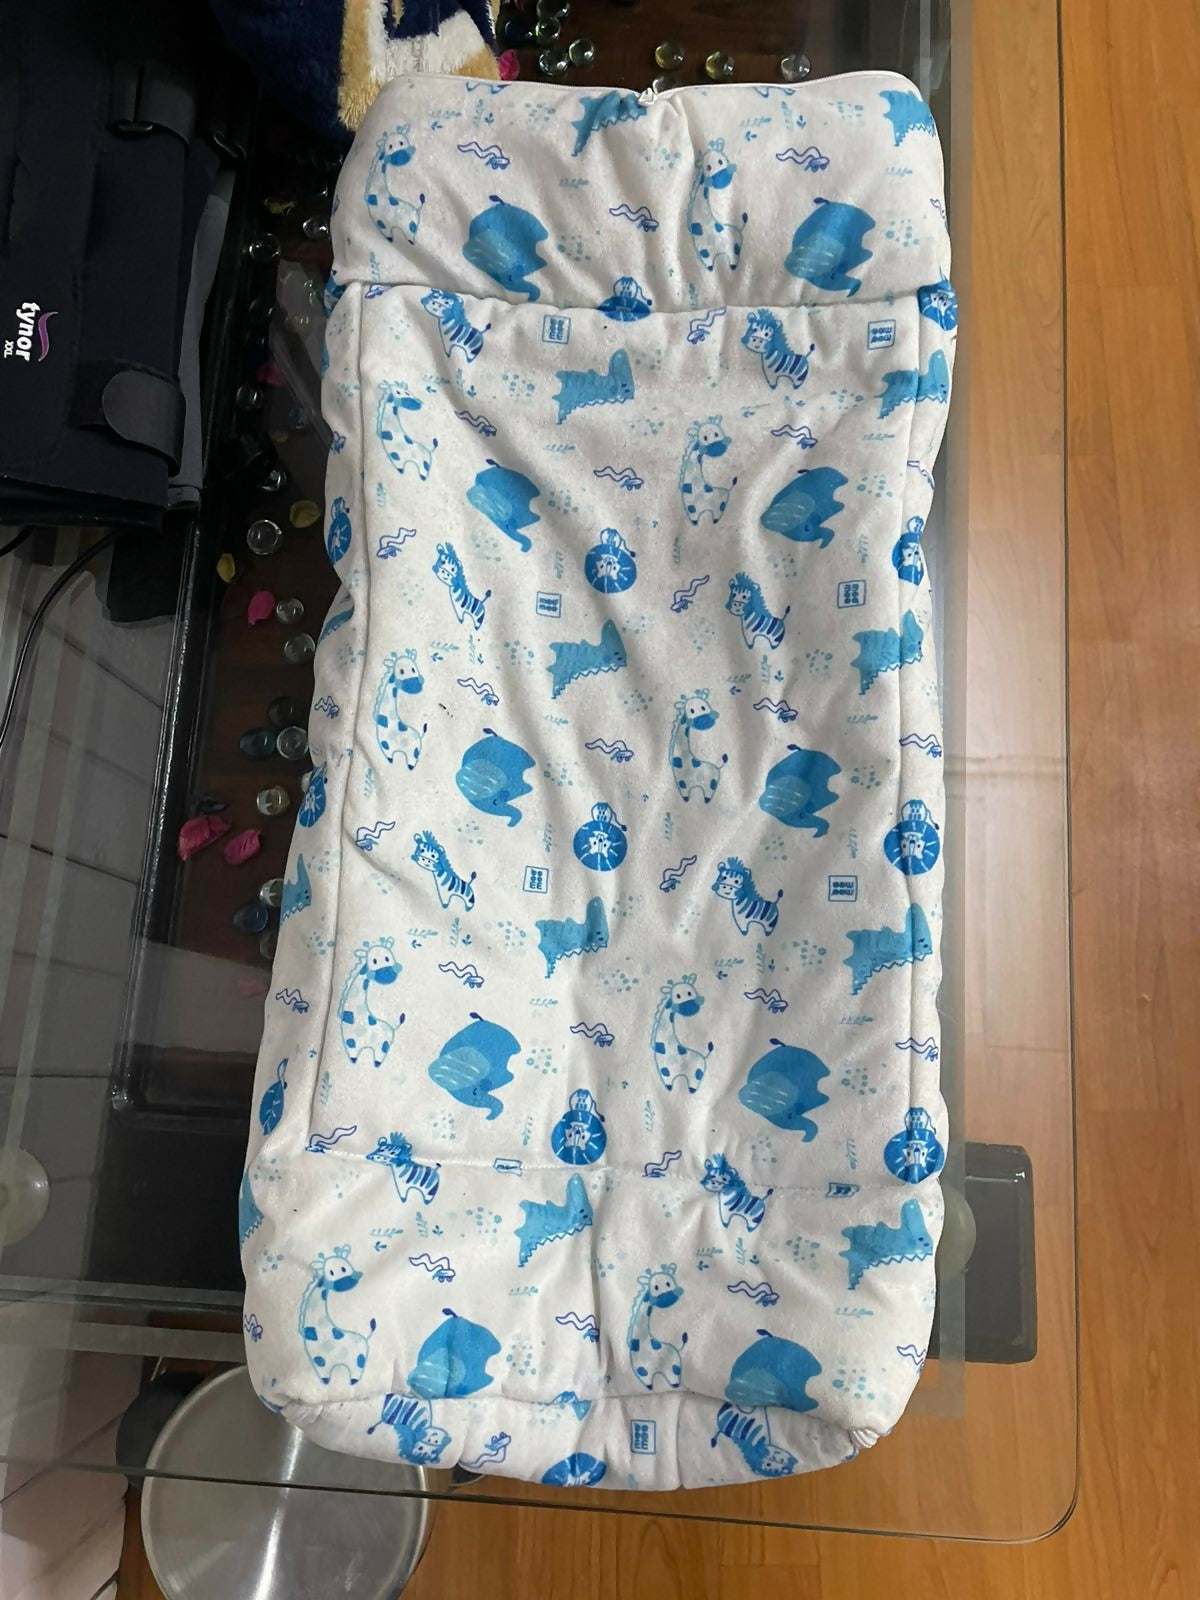 MEE MEE Baby Cozy/Warm Carry Nest Sleeping Bag & Mattress for Newborn Babies (Blue) - PyaraBaby